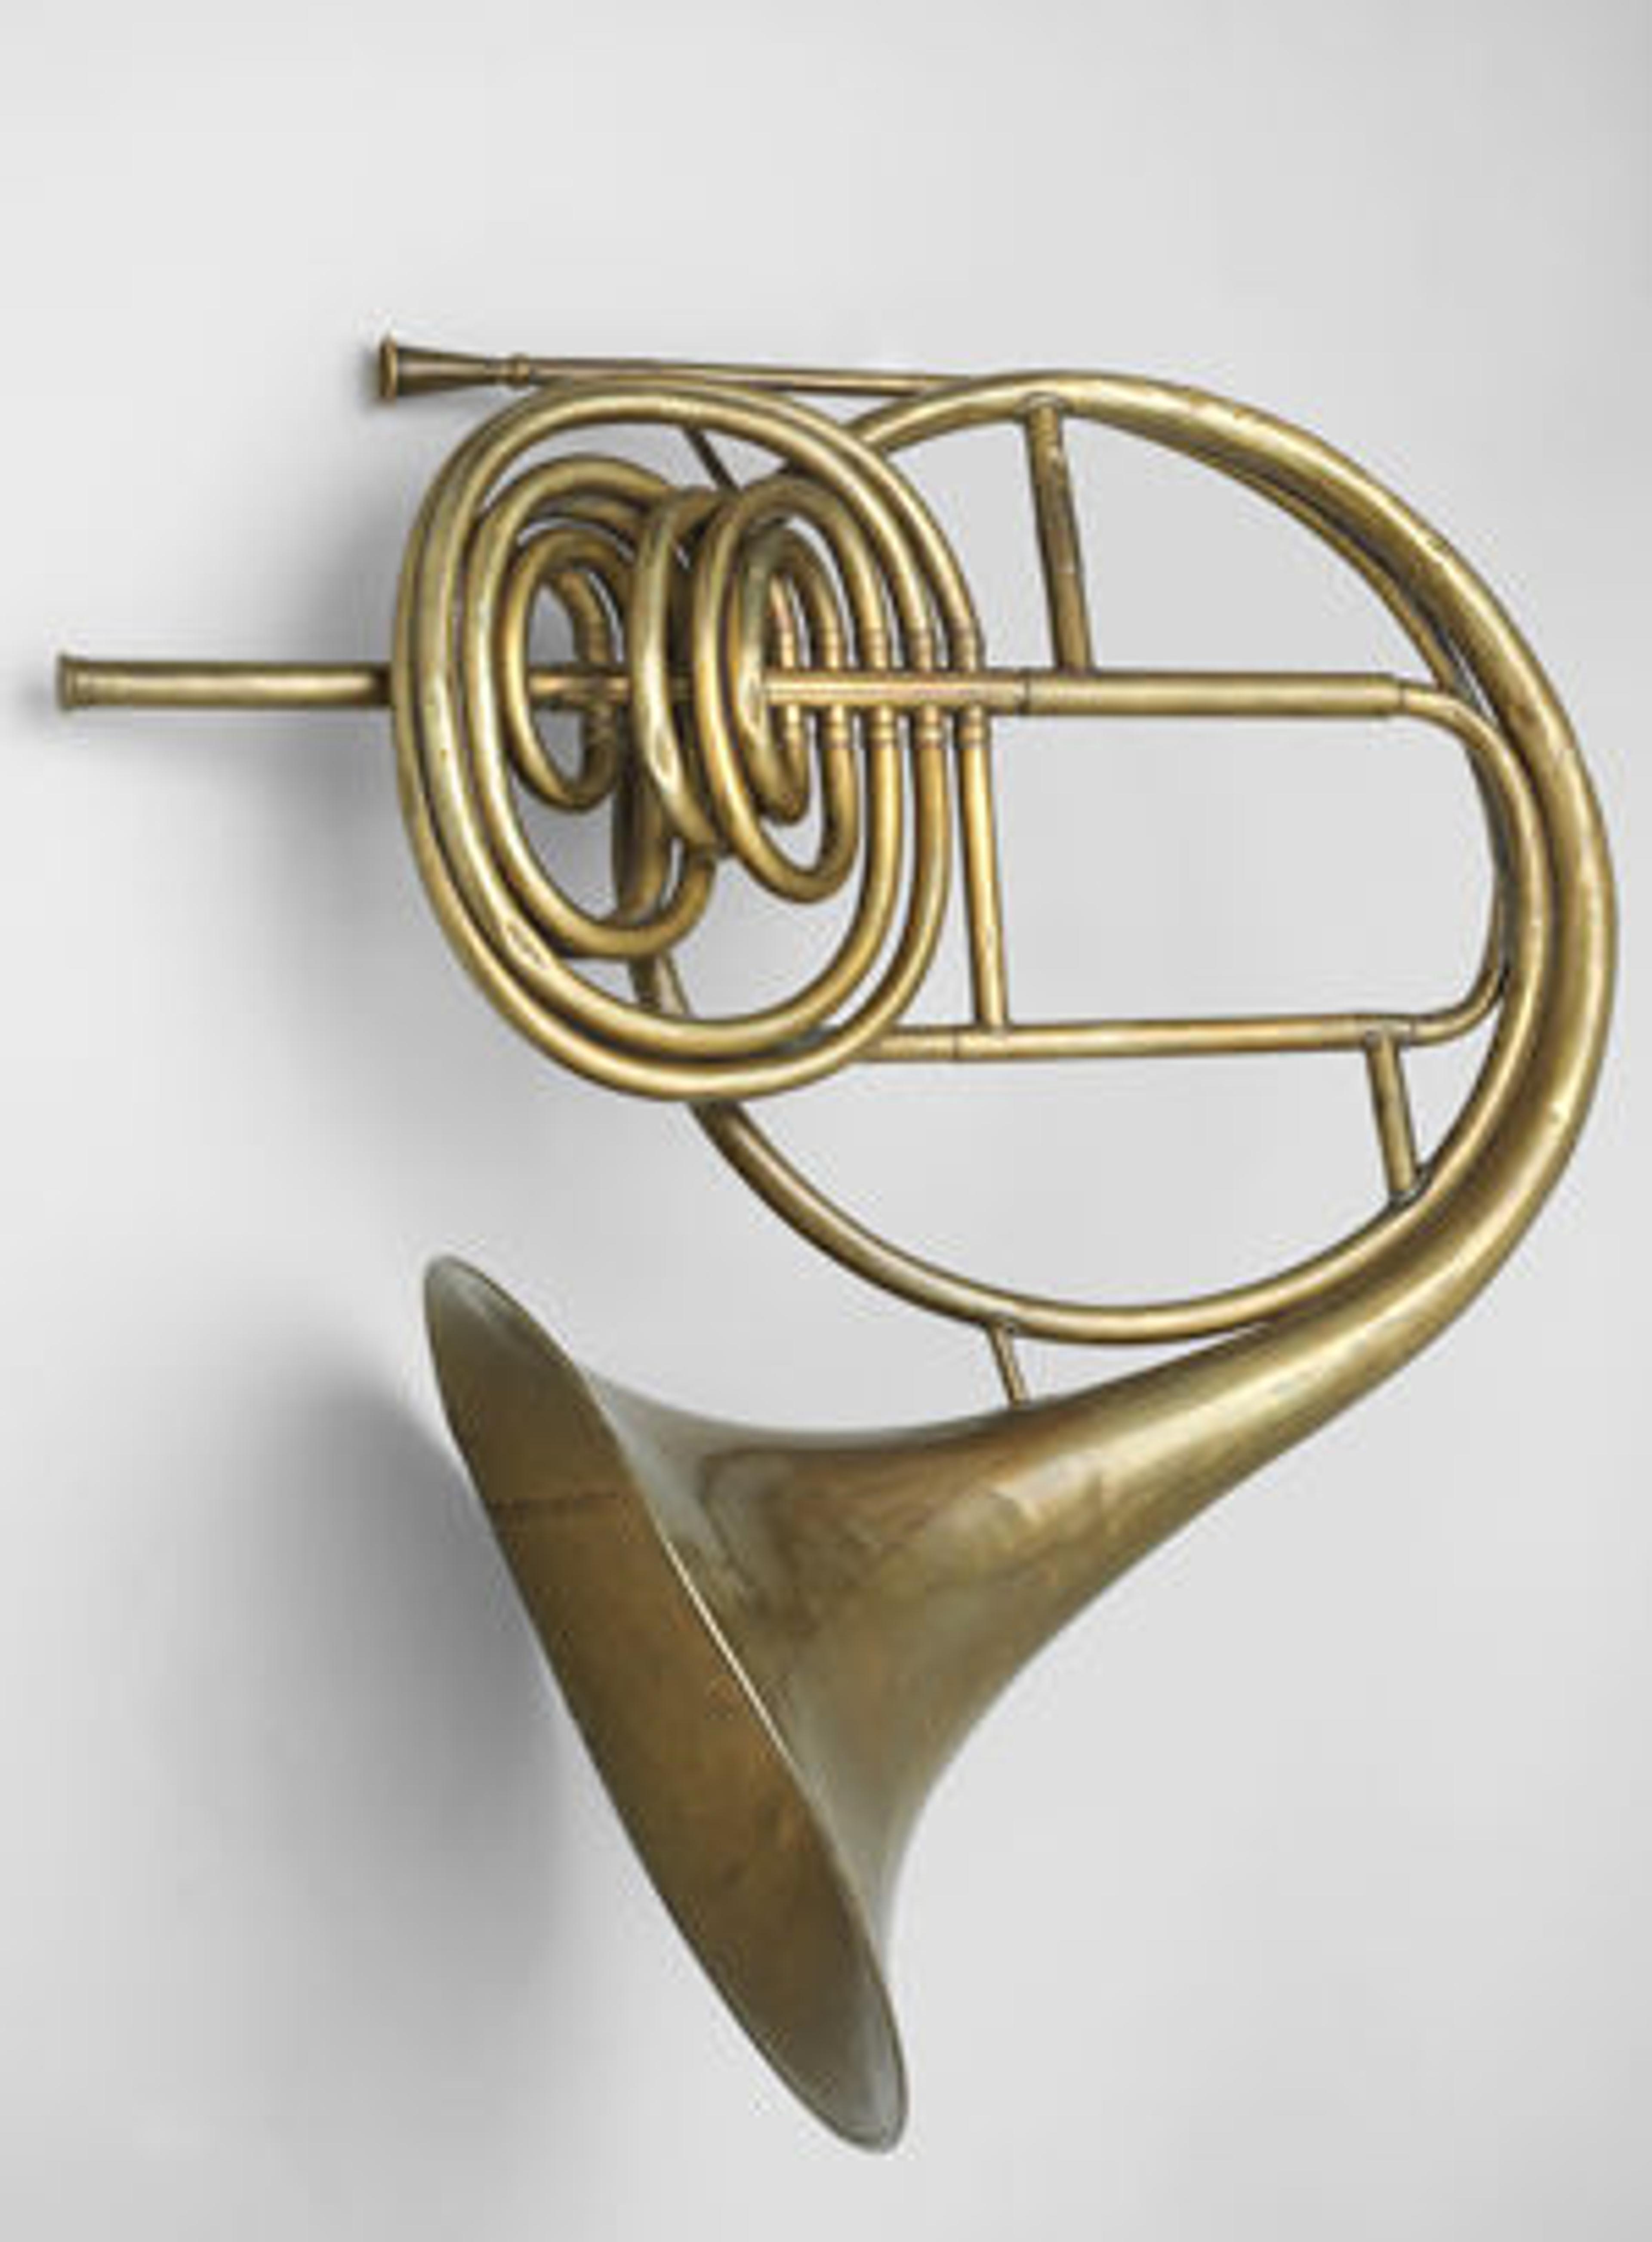 Attributed to Charles Joseph Sax (Belgian, 1790–1865) | Cor omnitonique (omnitonic horn), 1833 | 89.4.2418